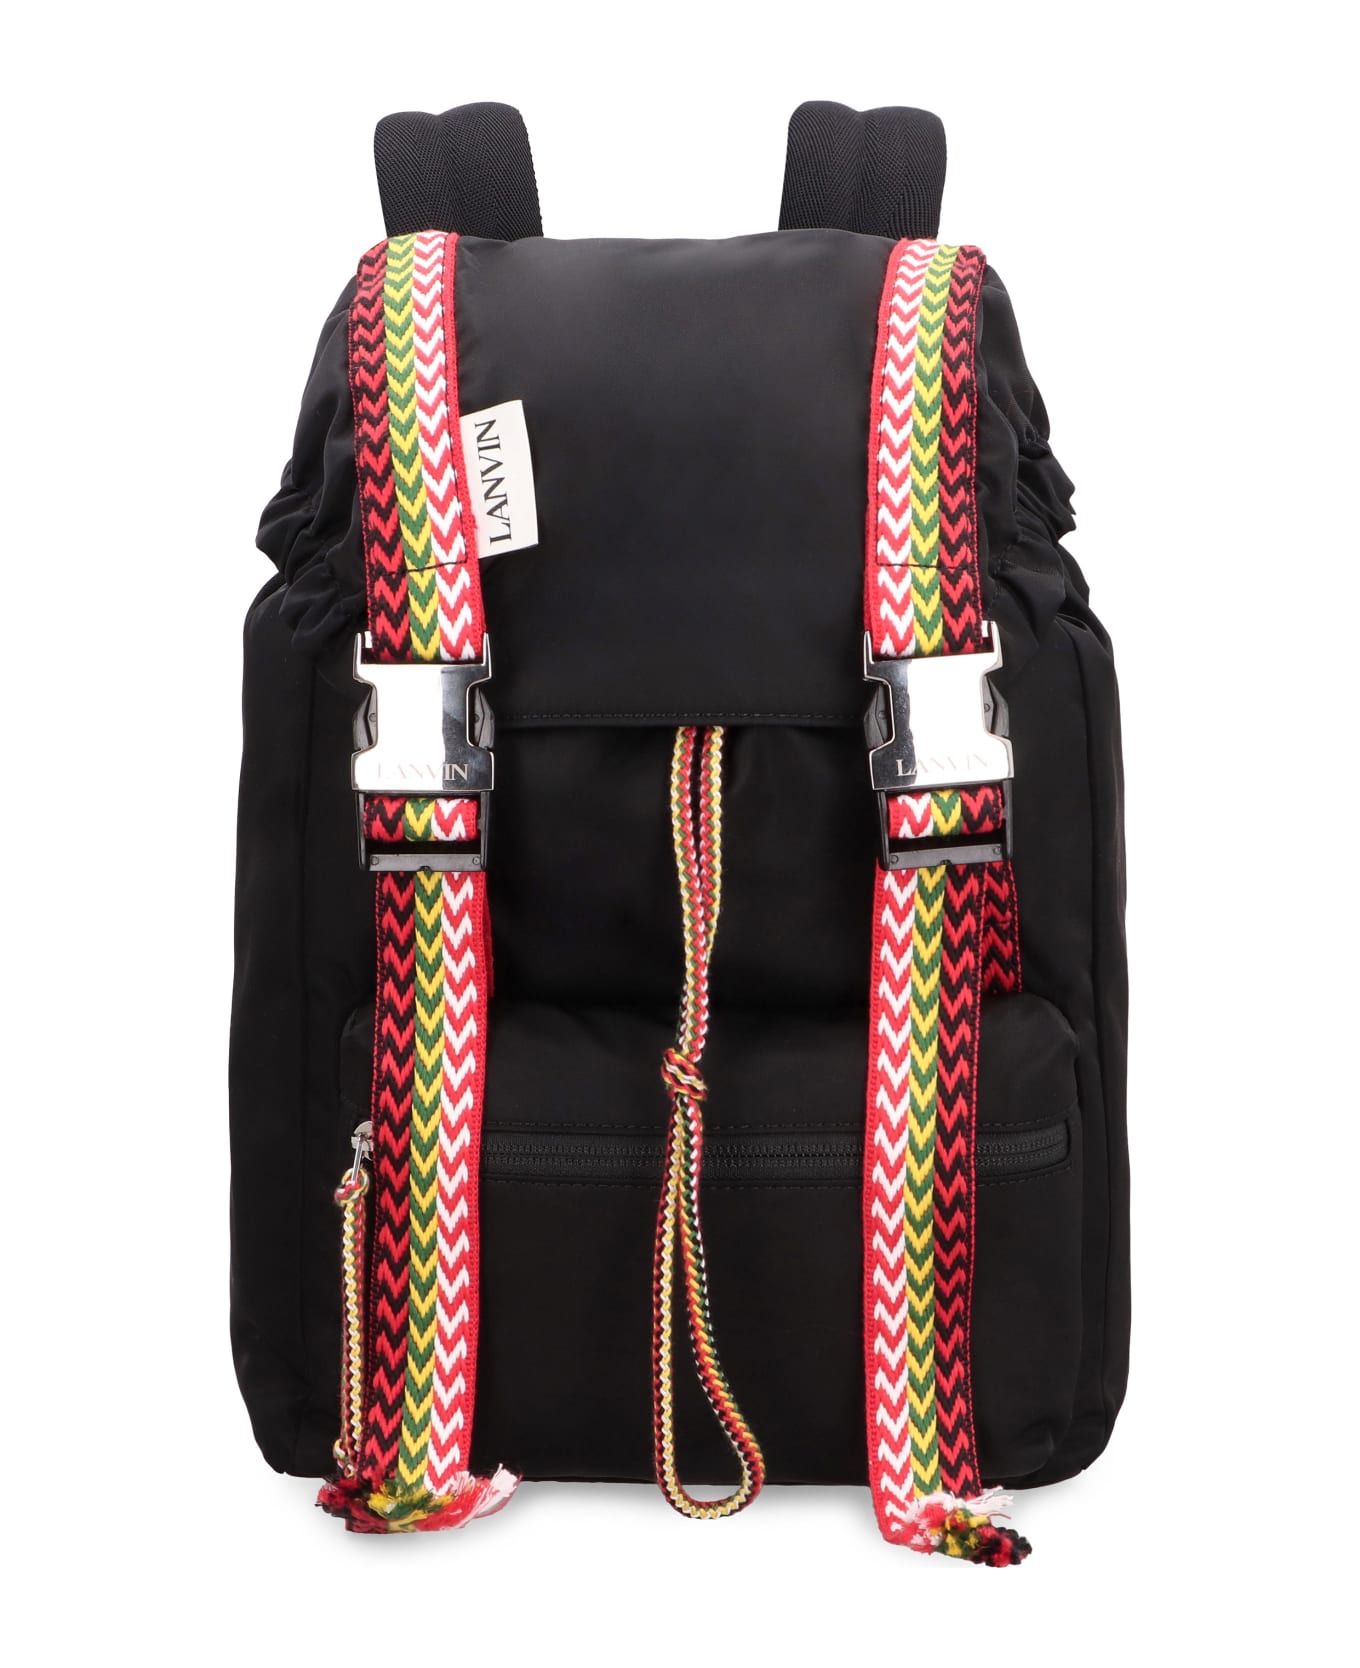 Lanvin Nano Curb Nylon Backpack - black